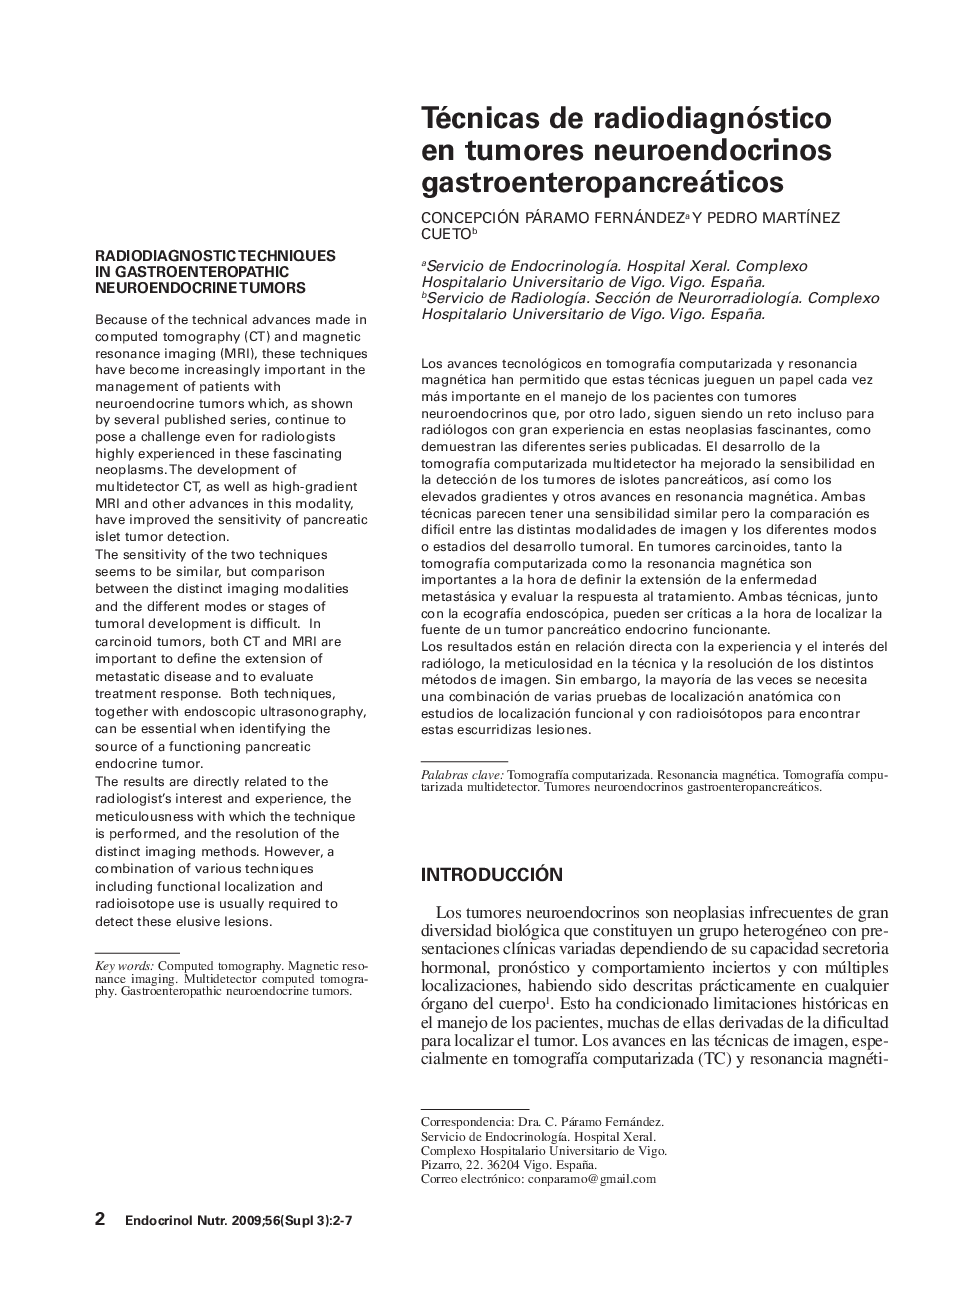 Técnicas de radiodiagnóstico en tumores neuroendocrinos gastroenteropancreáticos